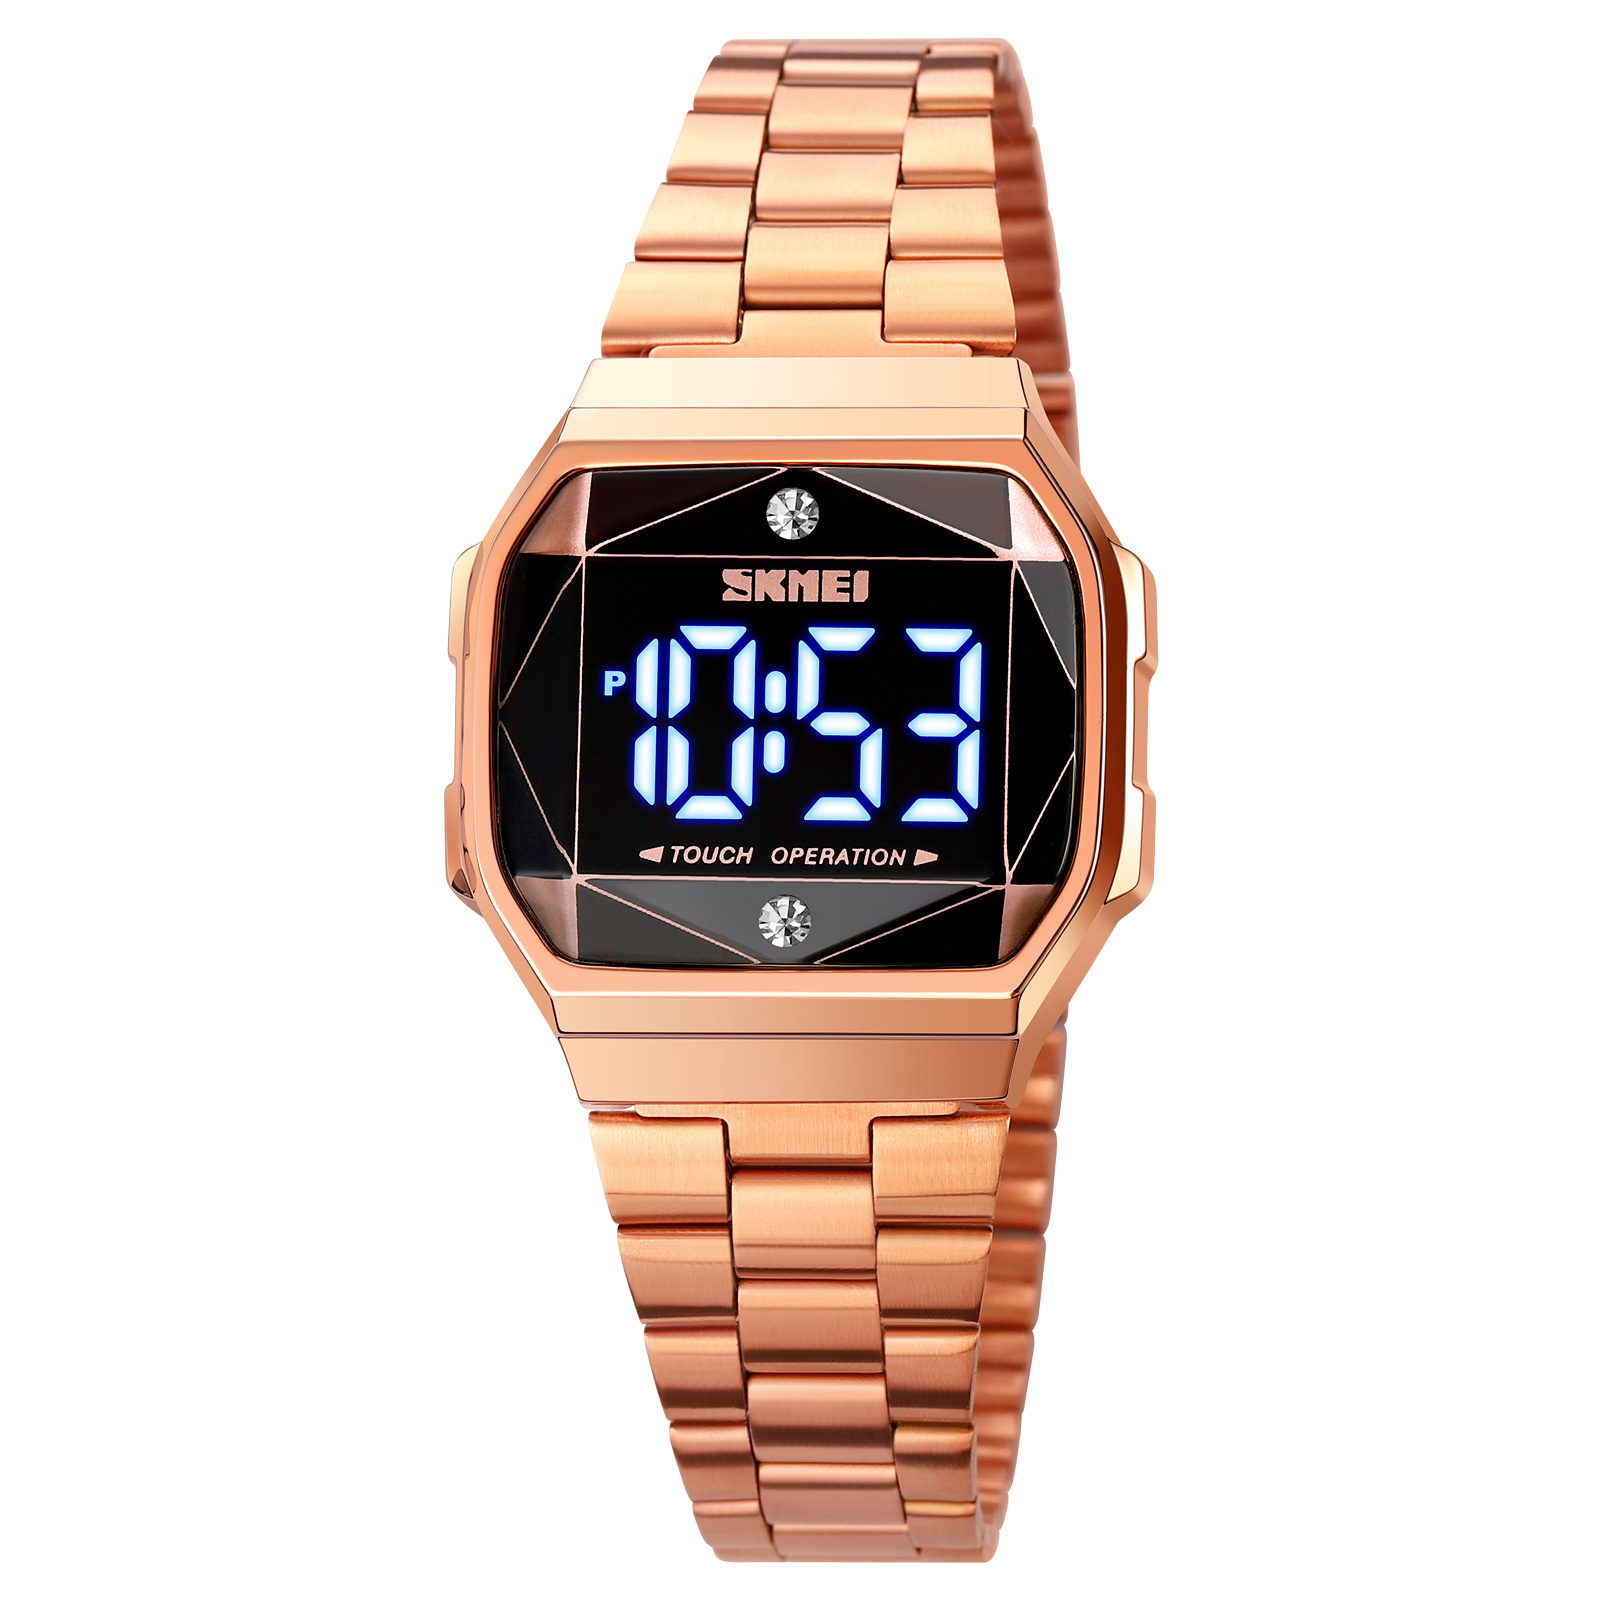 Led Watch-Skmei Watch Manufacture Co.,Ltd